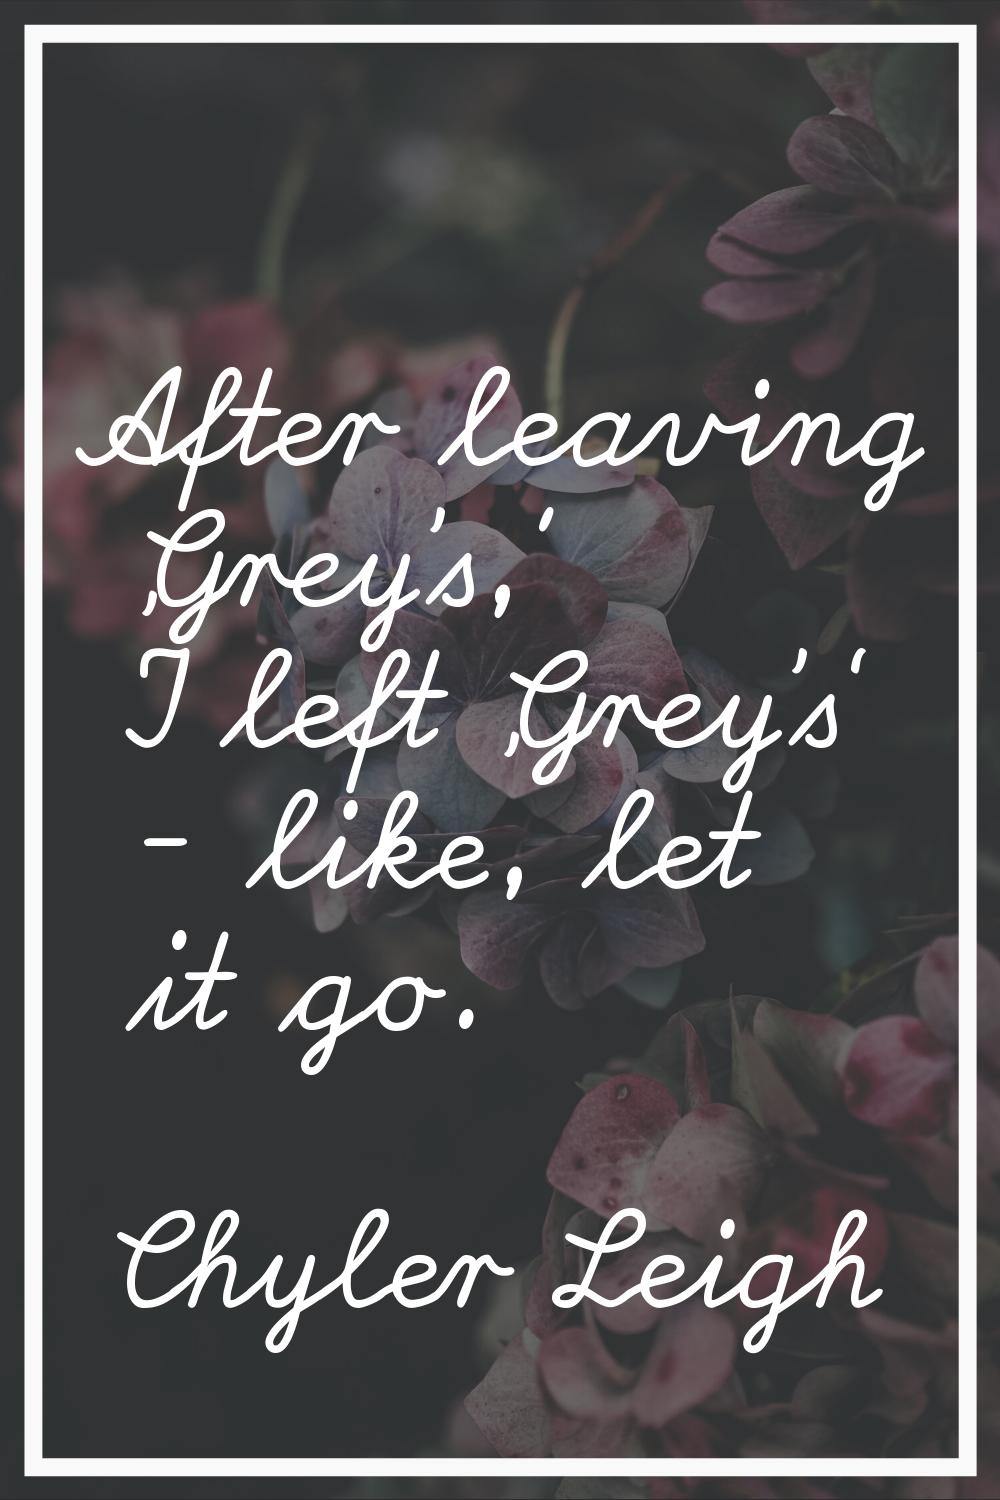 After leaving 'Grey's,' I left 'Grey's' - like, let it go.